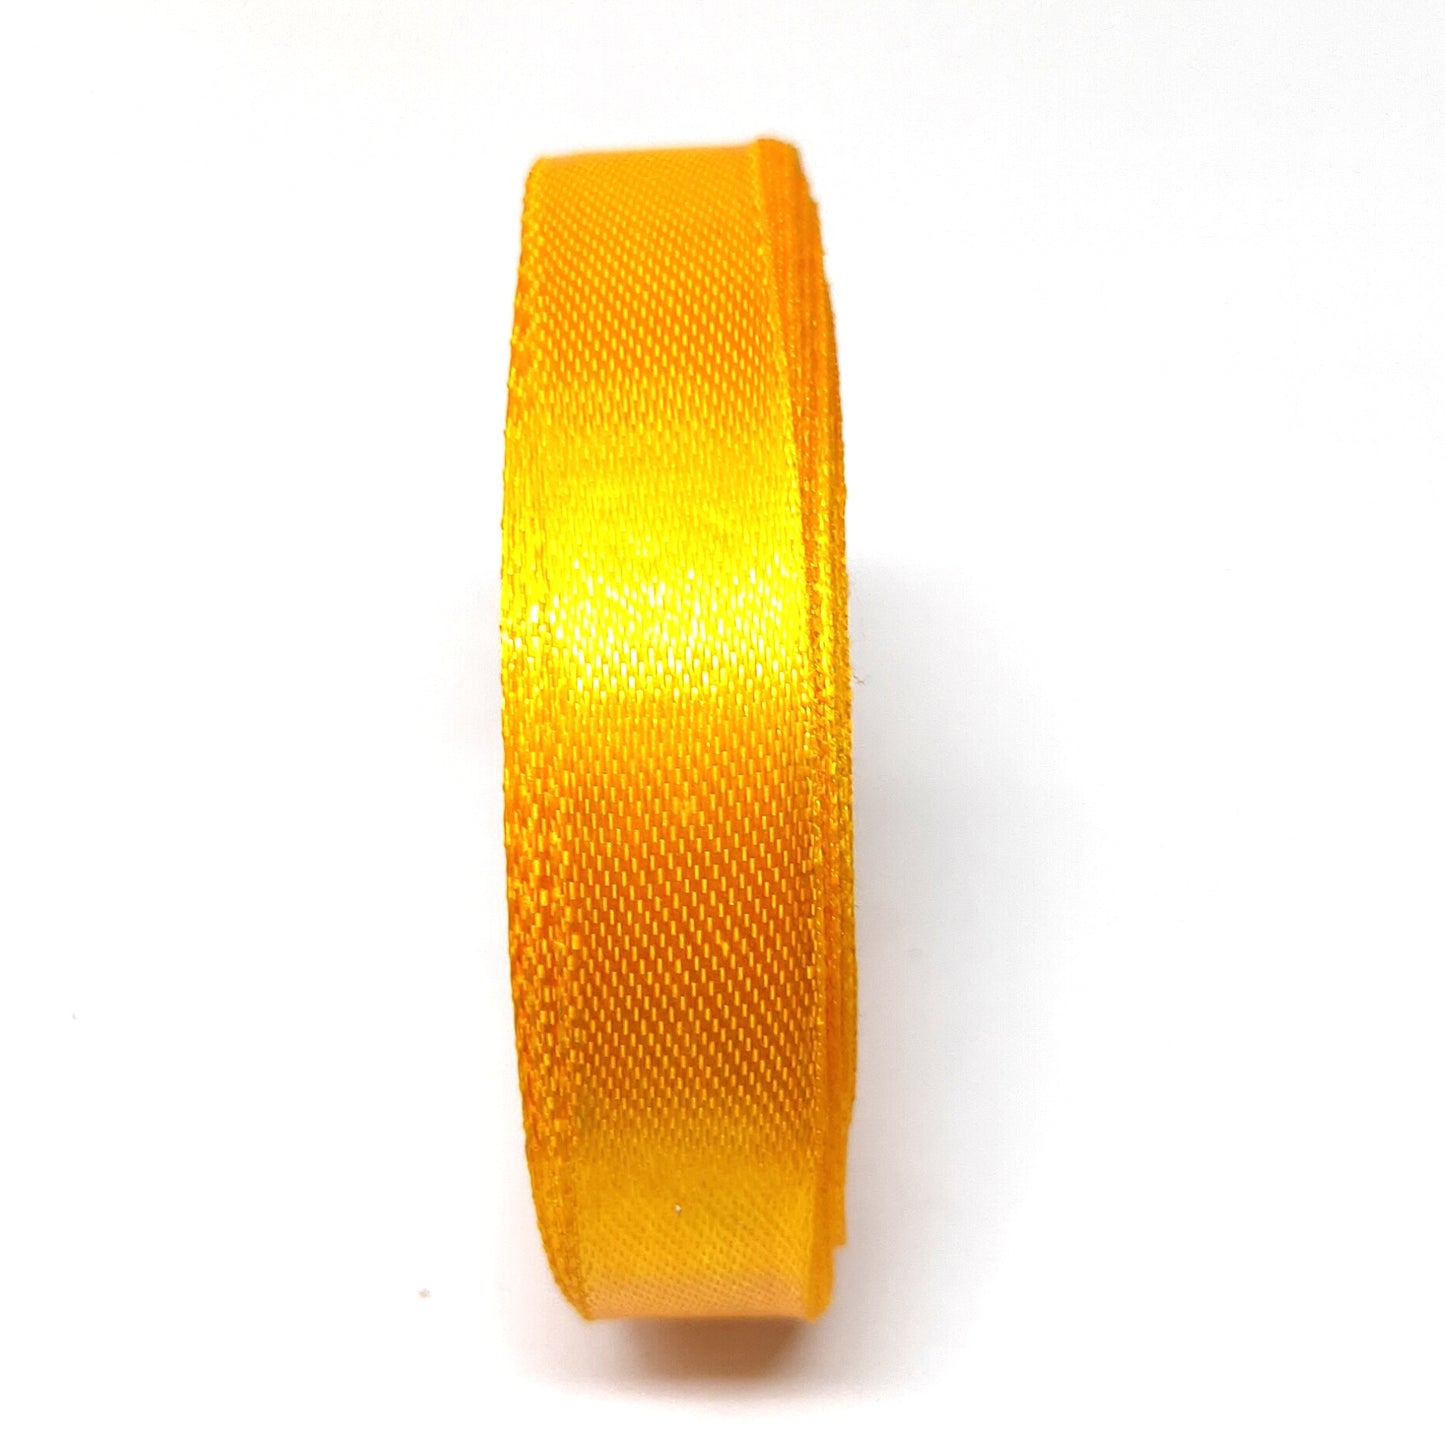 12.5 mm (Half Inch) Yellow Satin Ribbon (012)